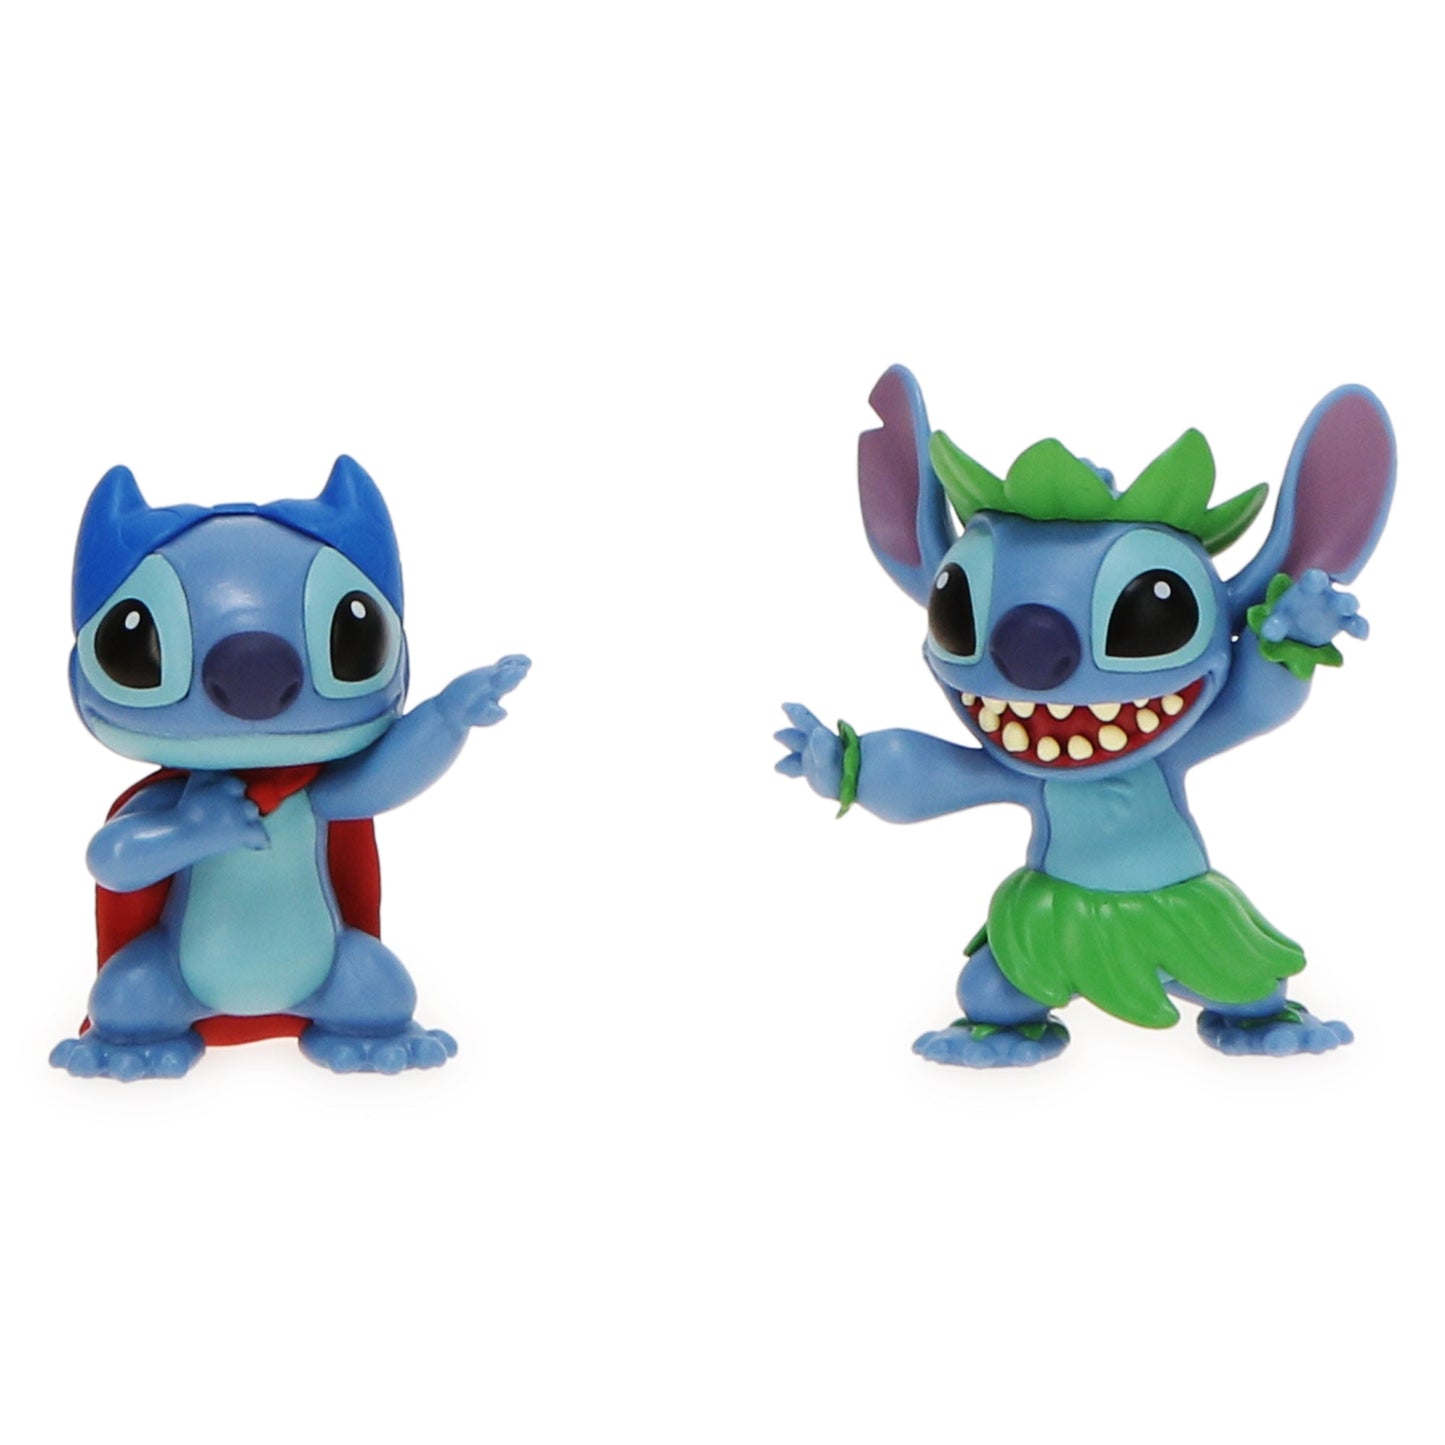 Disney Stitch Set 2-Pack